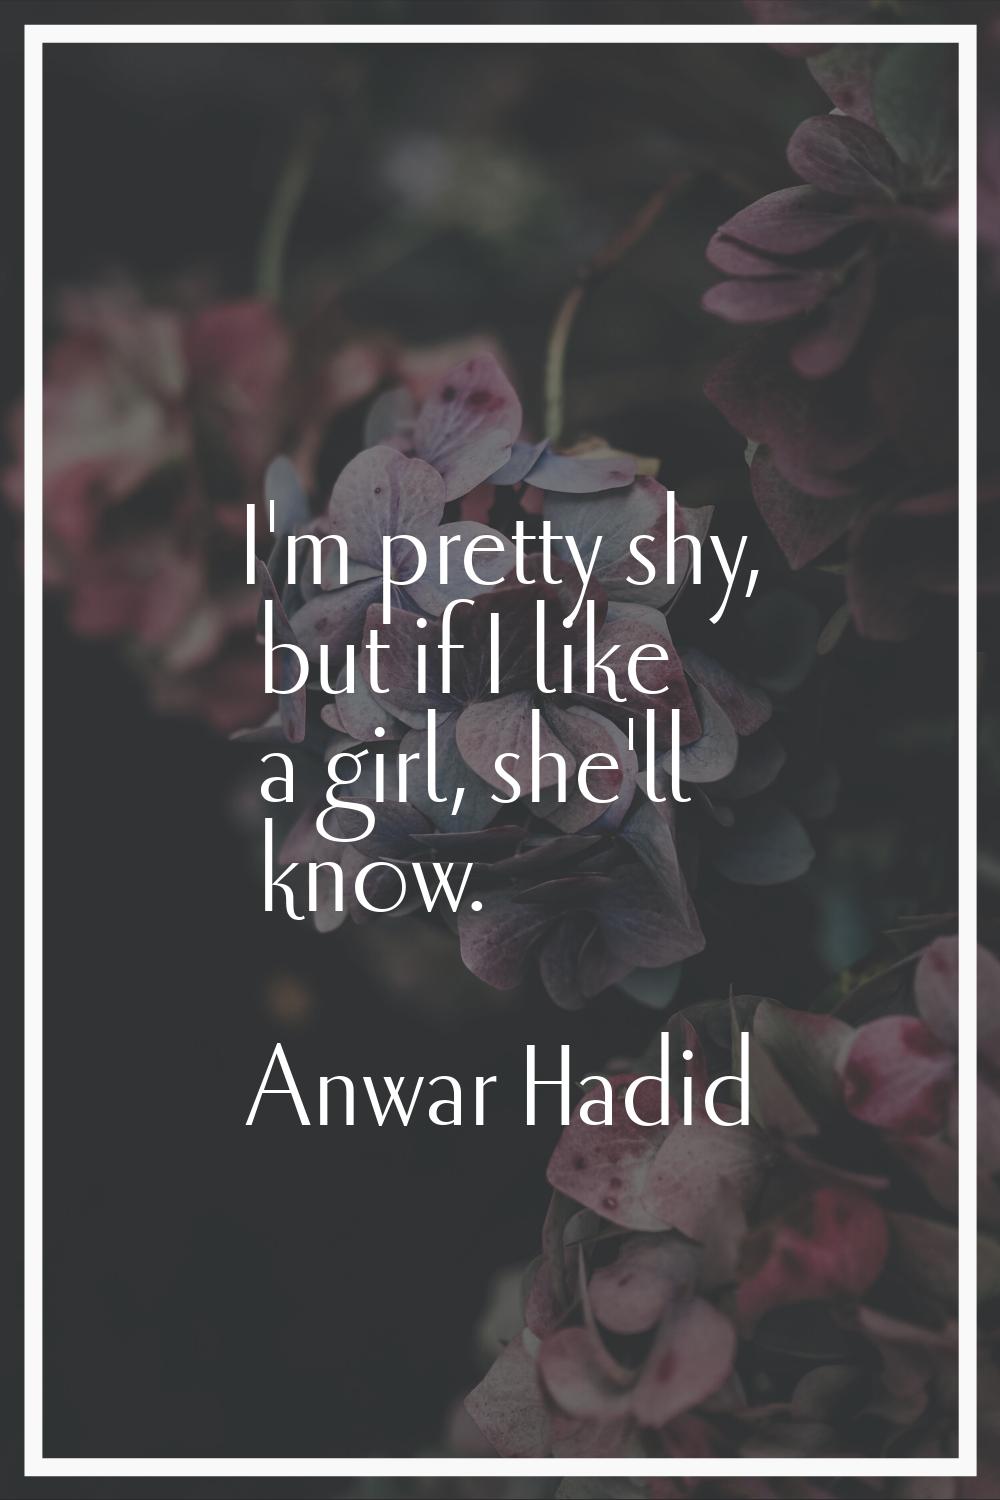 I'm pretty shy, but if I like a girl, she'll know.